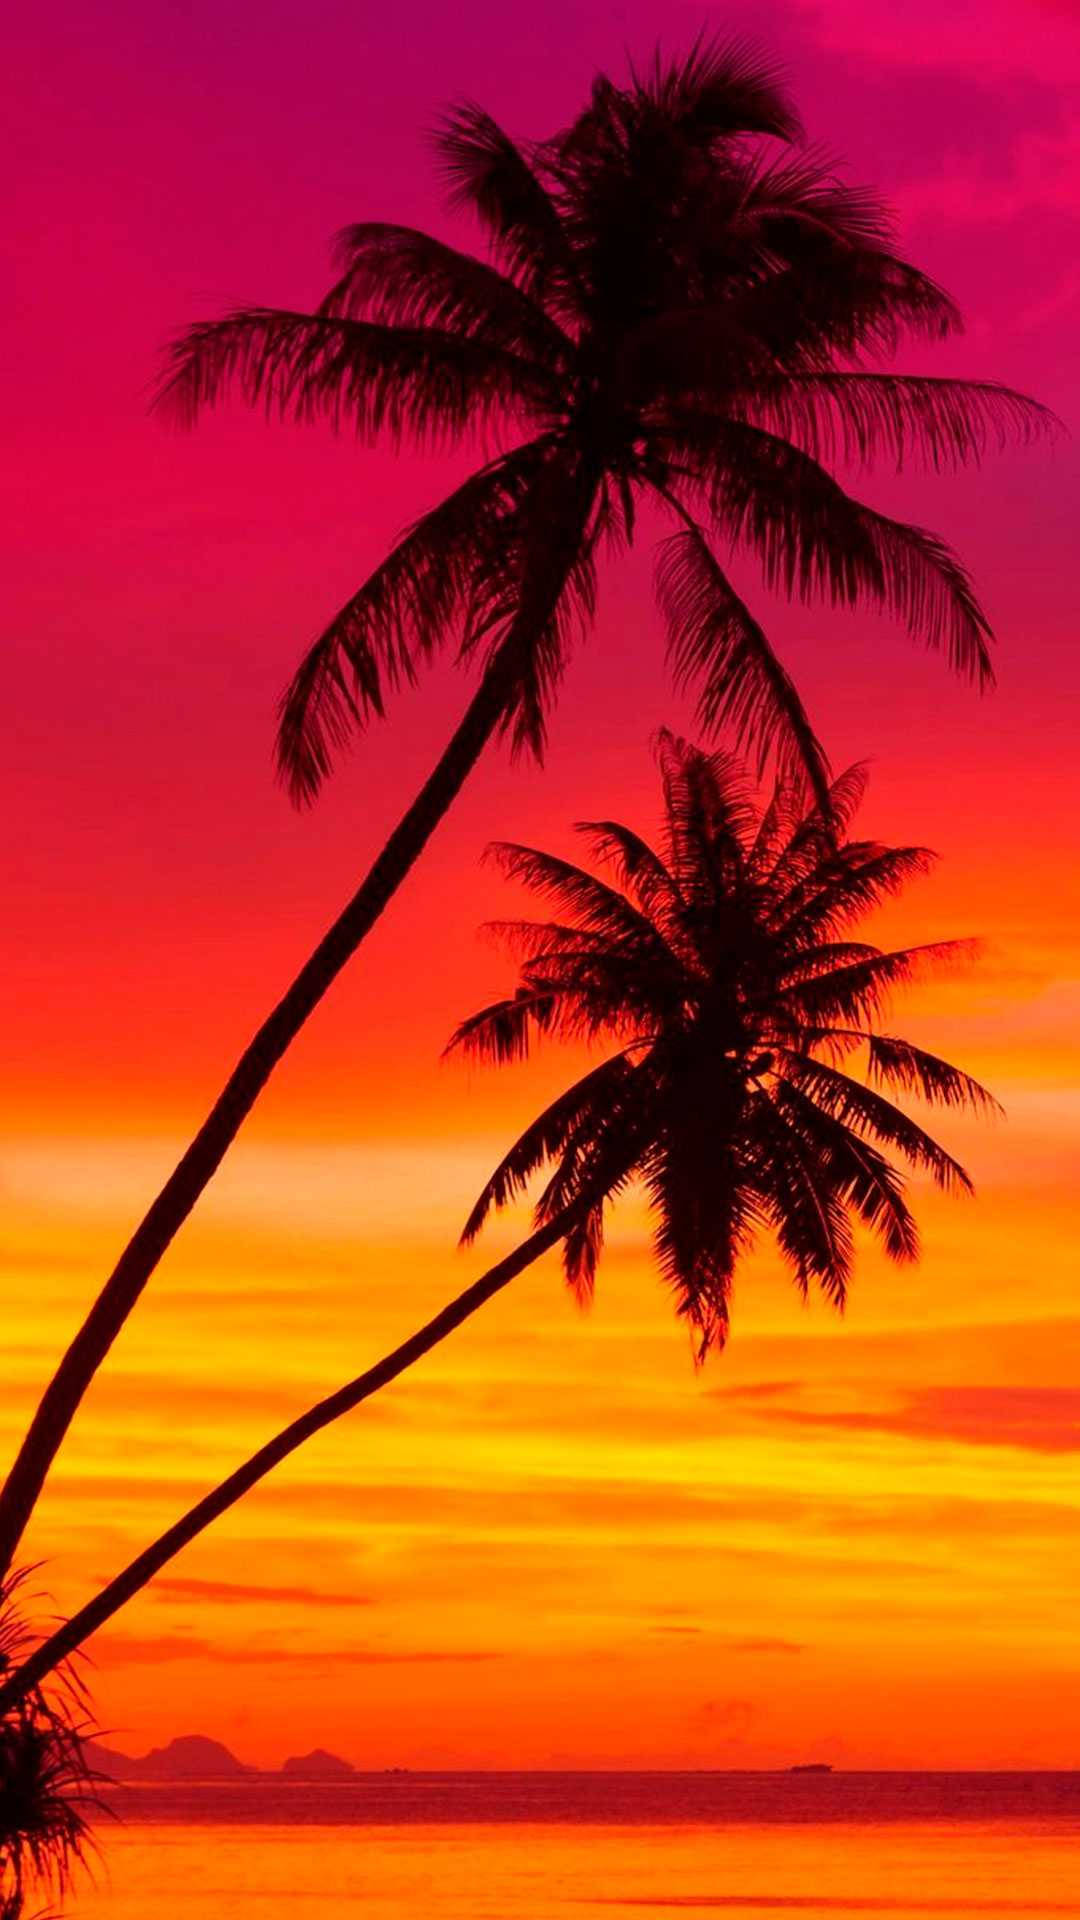 Sunset And Palm Trees Malibu Iphone Background